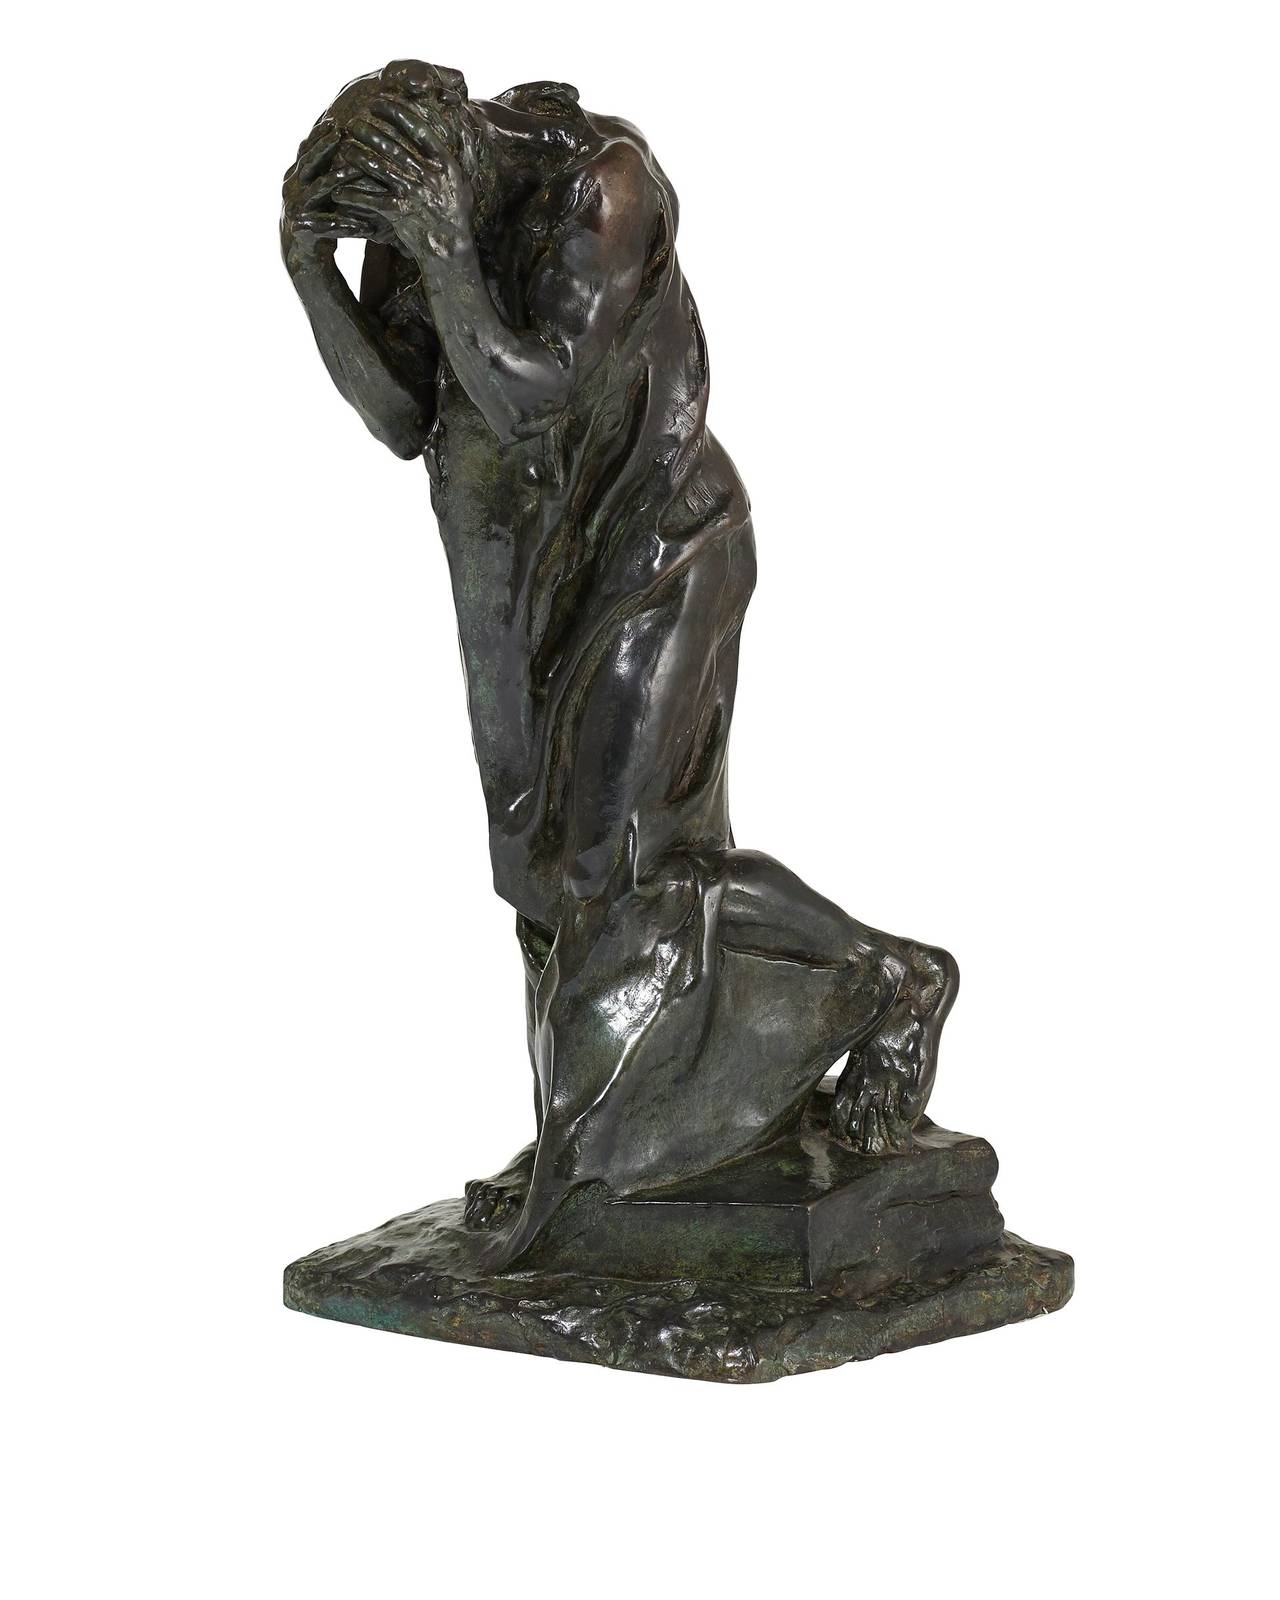 Burgher Andreus De Andres - Sculpture by Auguste Rodin